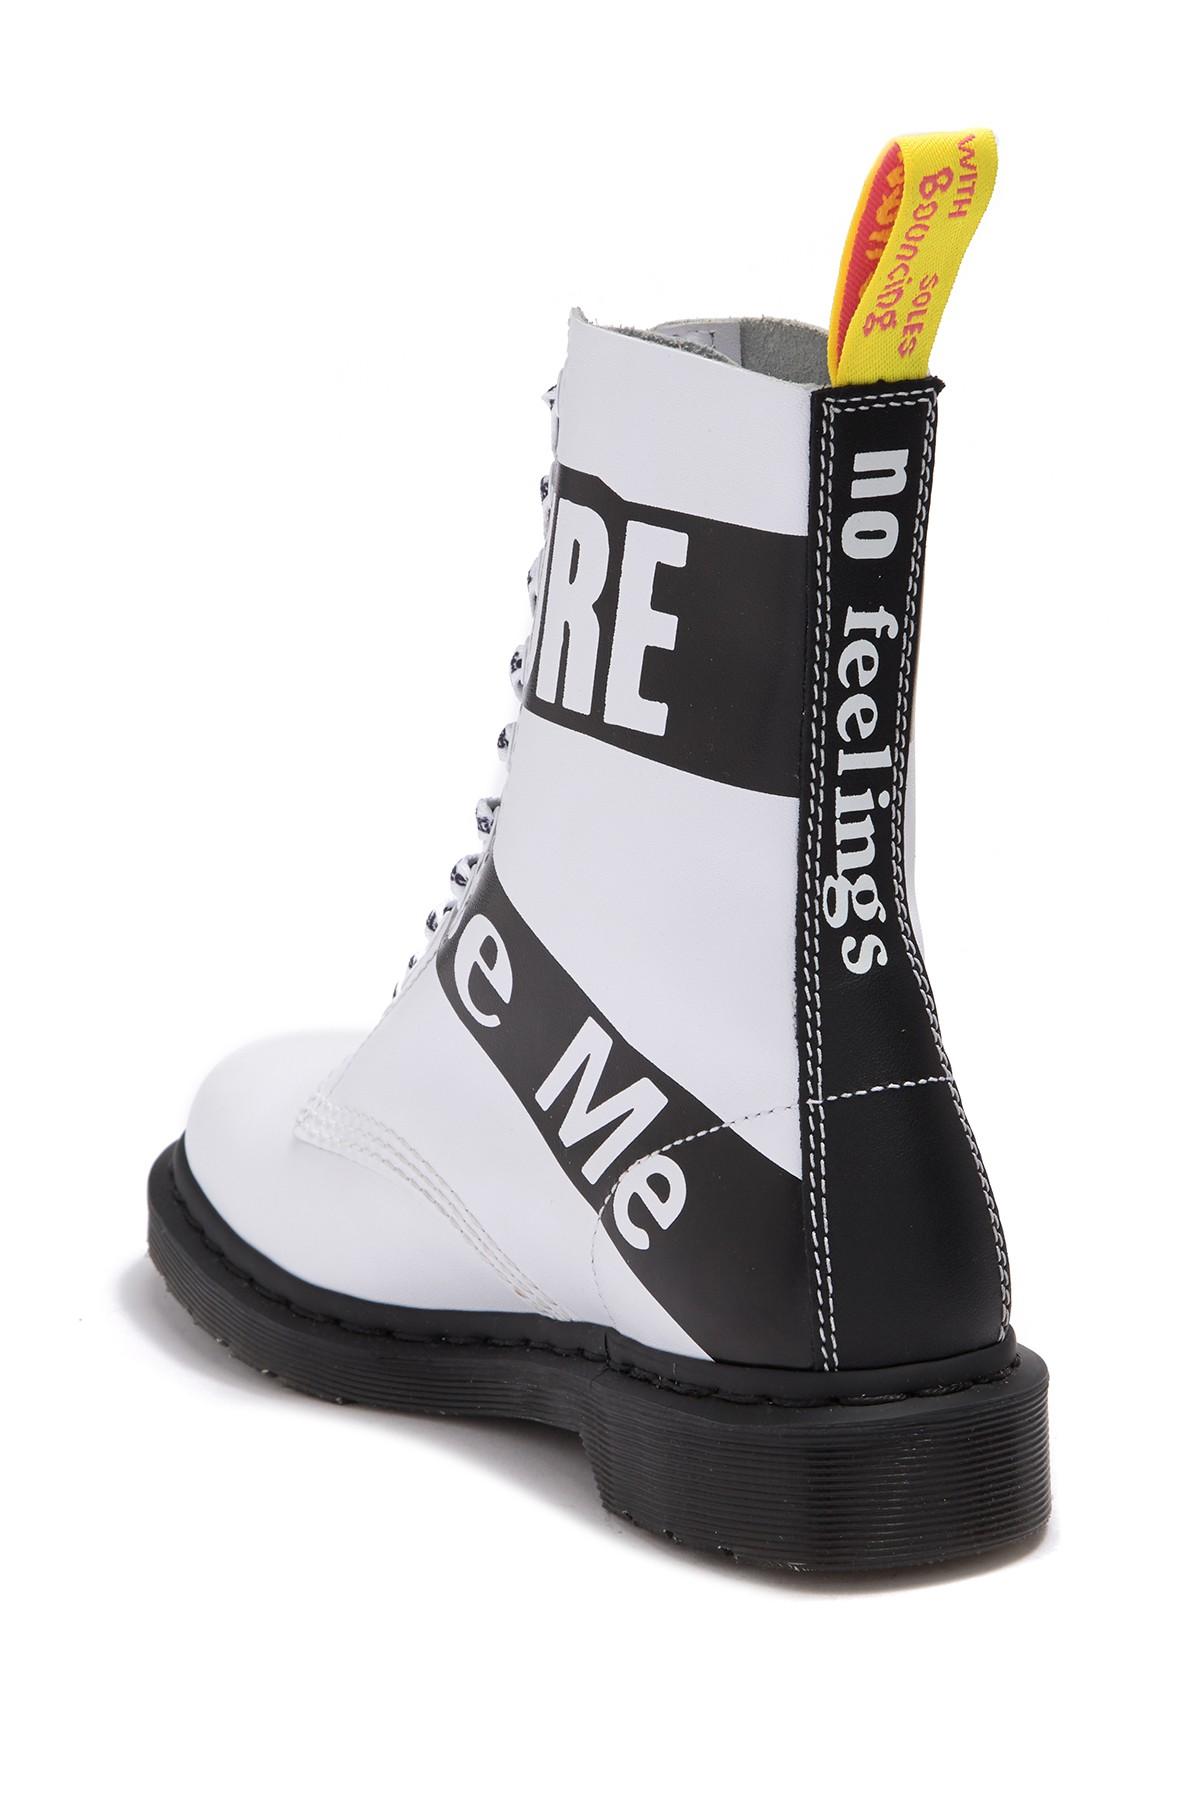 Martens Sex Pistols High Leather Boot White for Men - Lyst